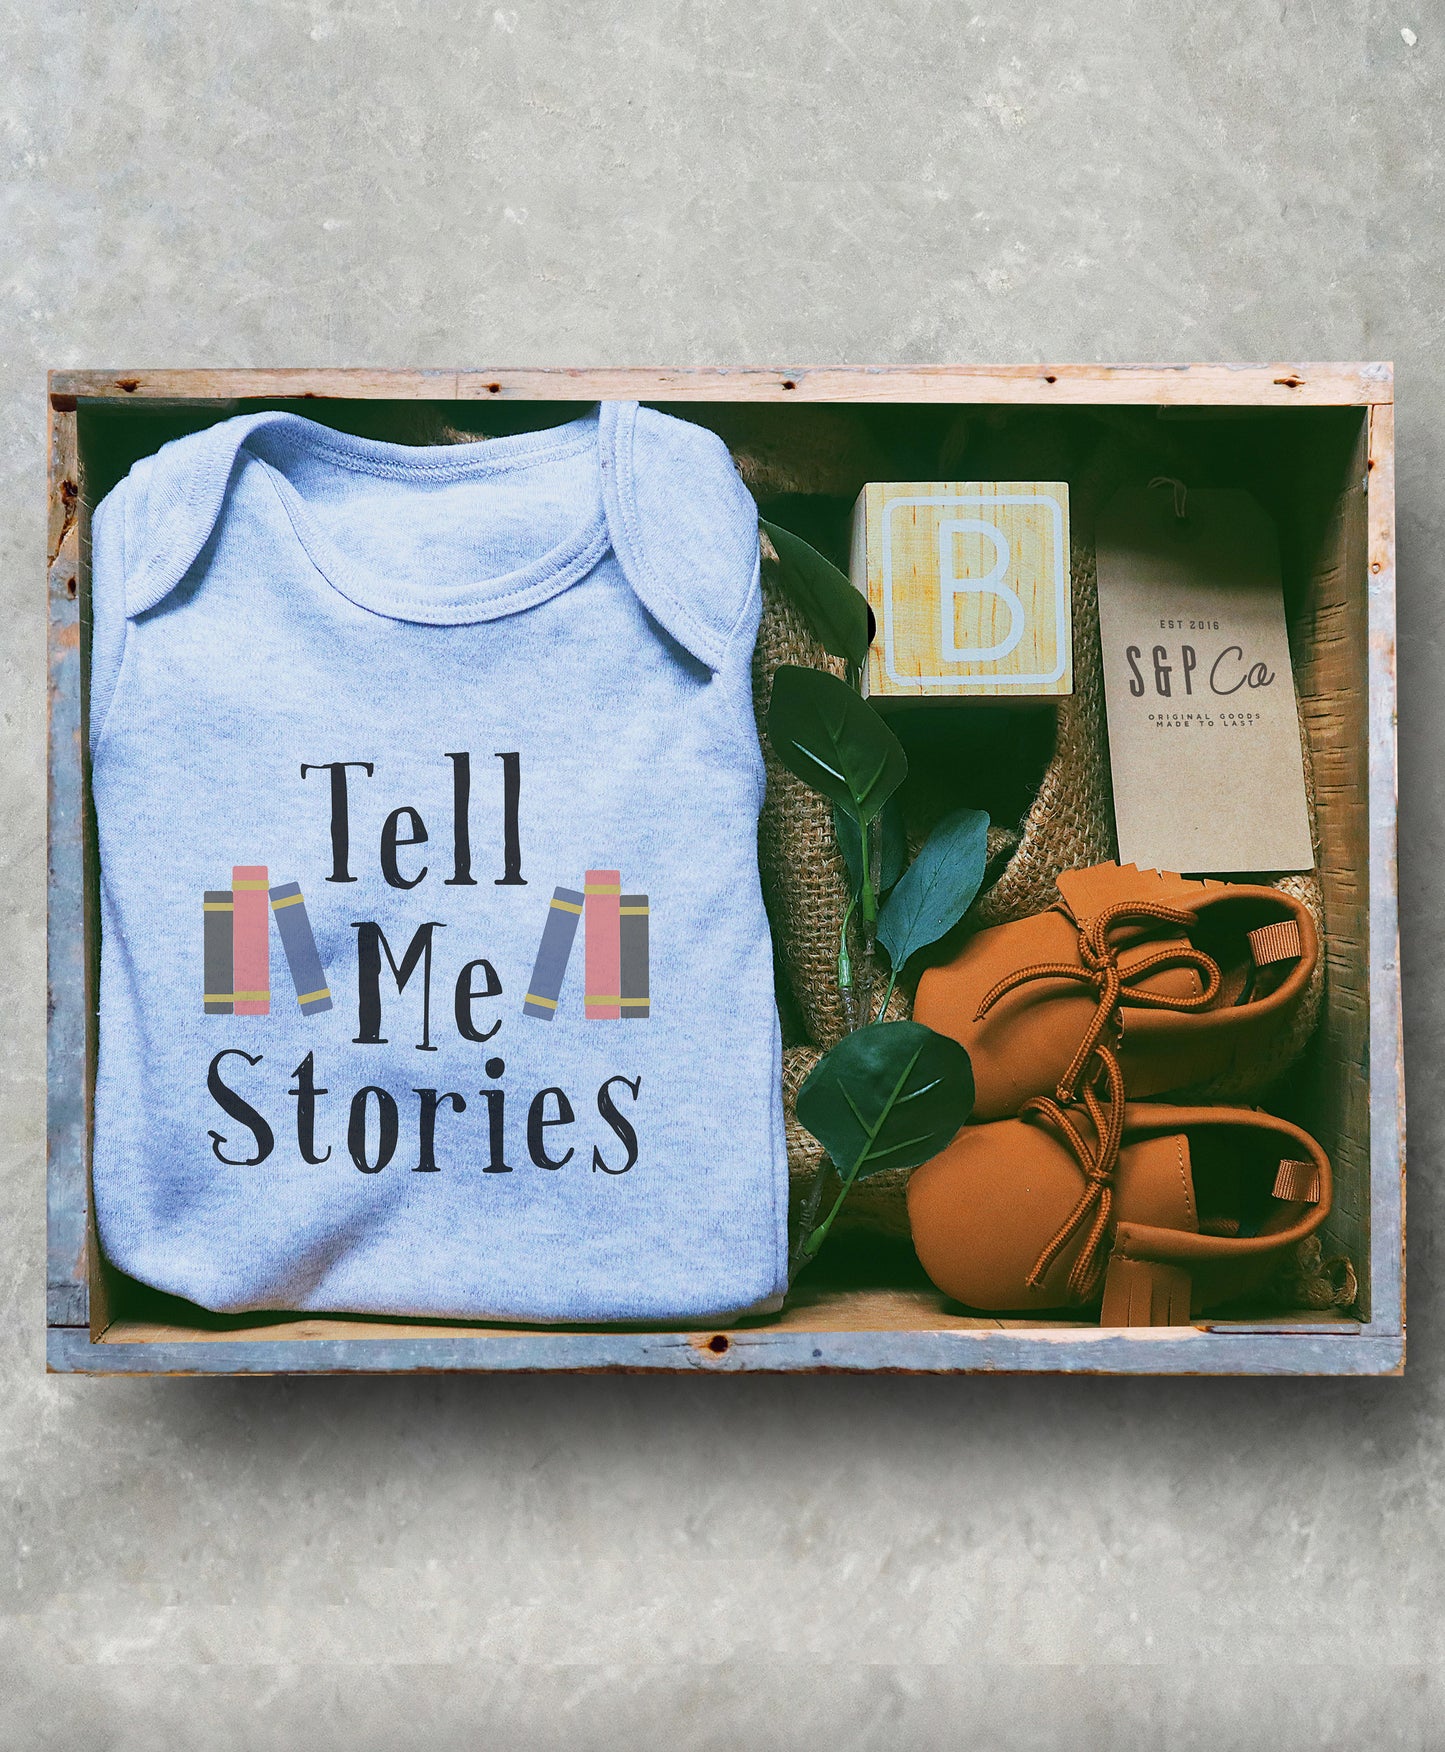 Tell Me Stories Baby Bodysuit